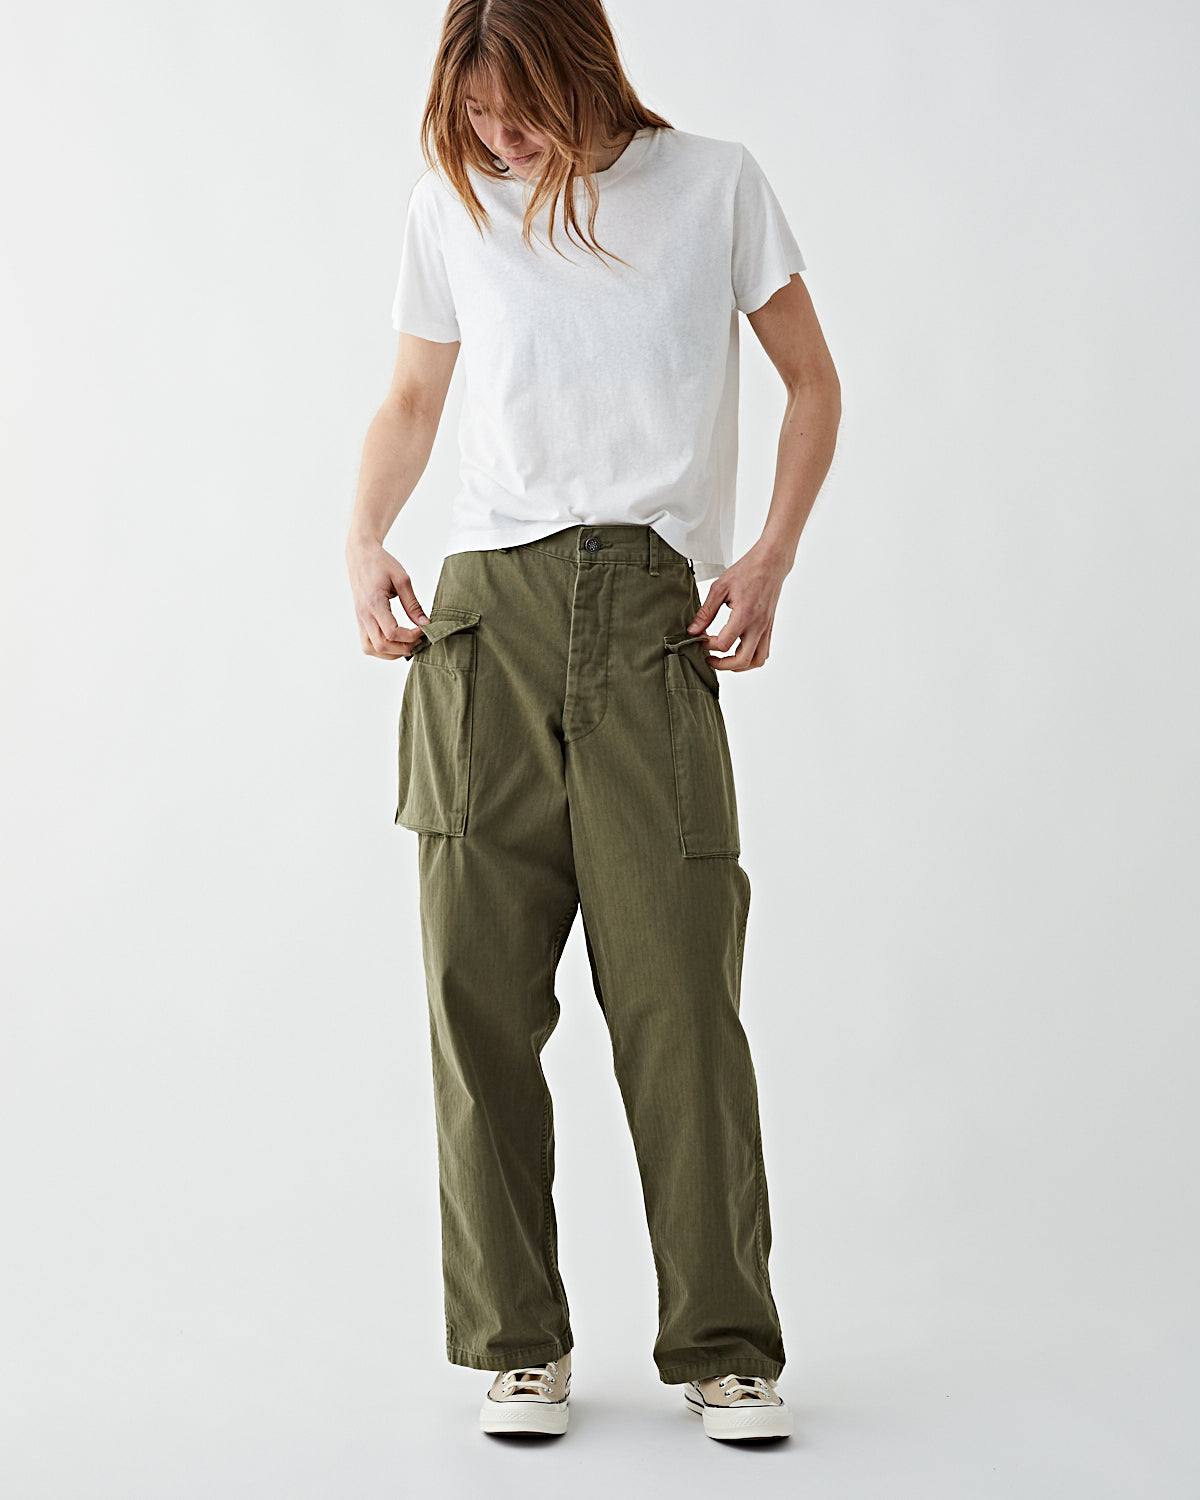 SHEIN Flap Pocket Side Cargo Pants  Green pants outfit Cargo pants  outfit Green cargo pants outfit